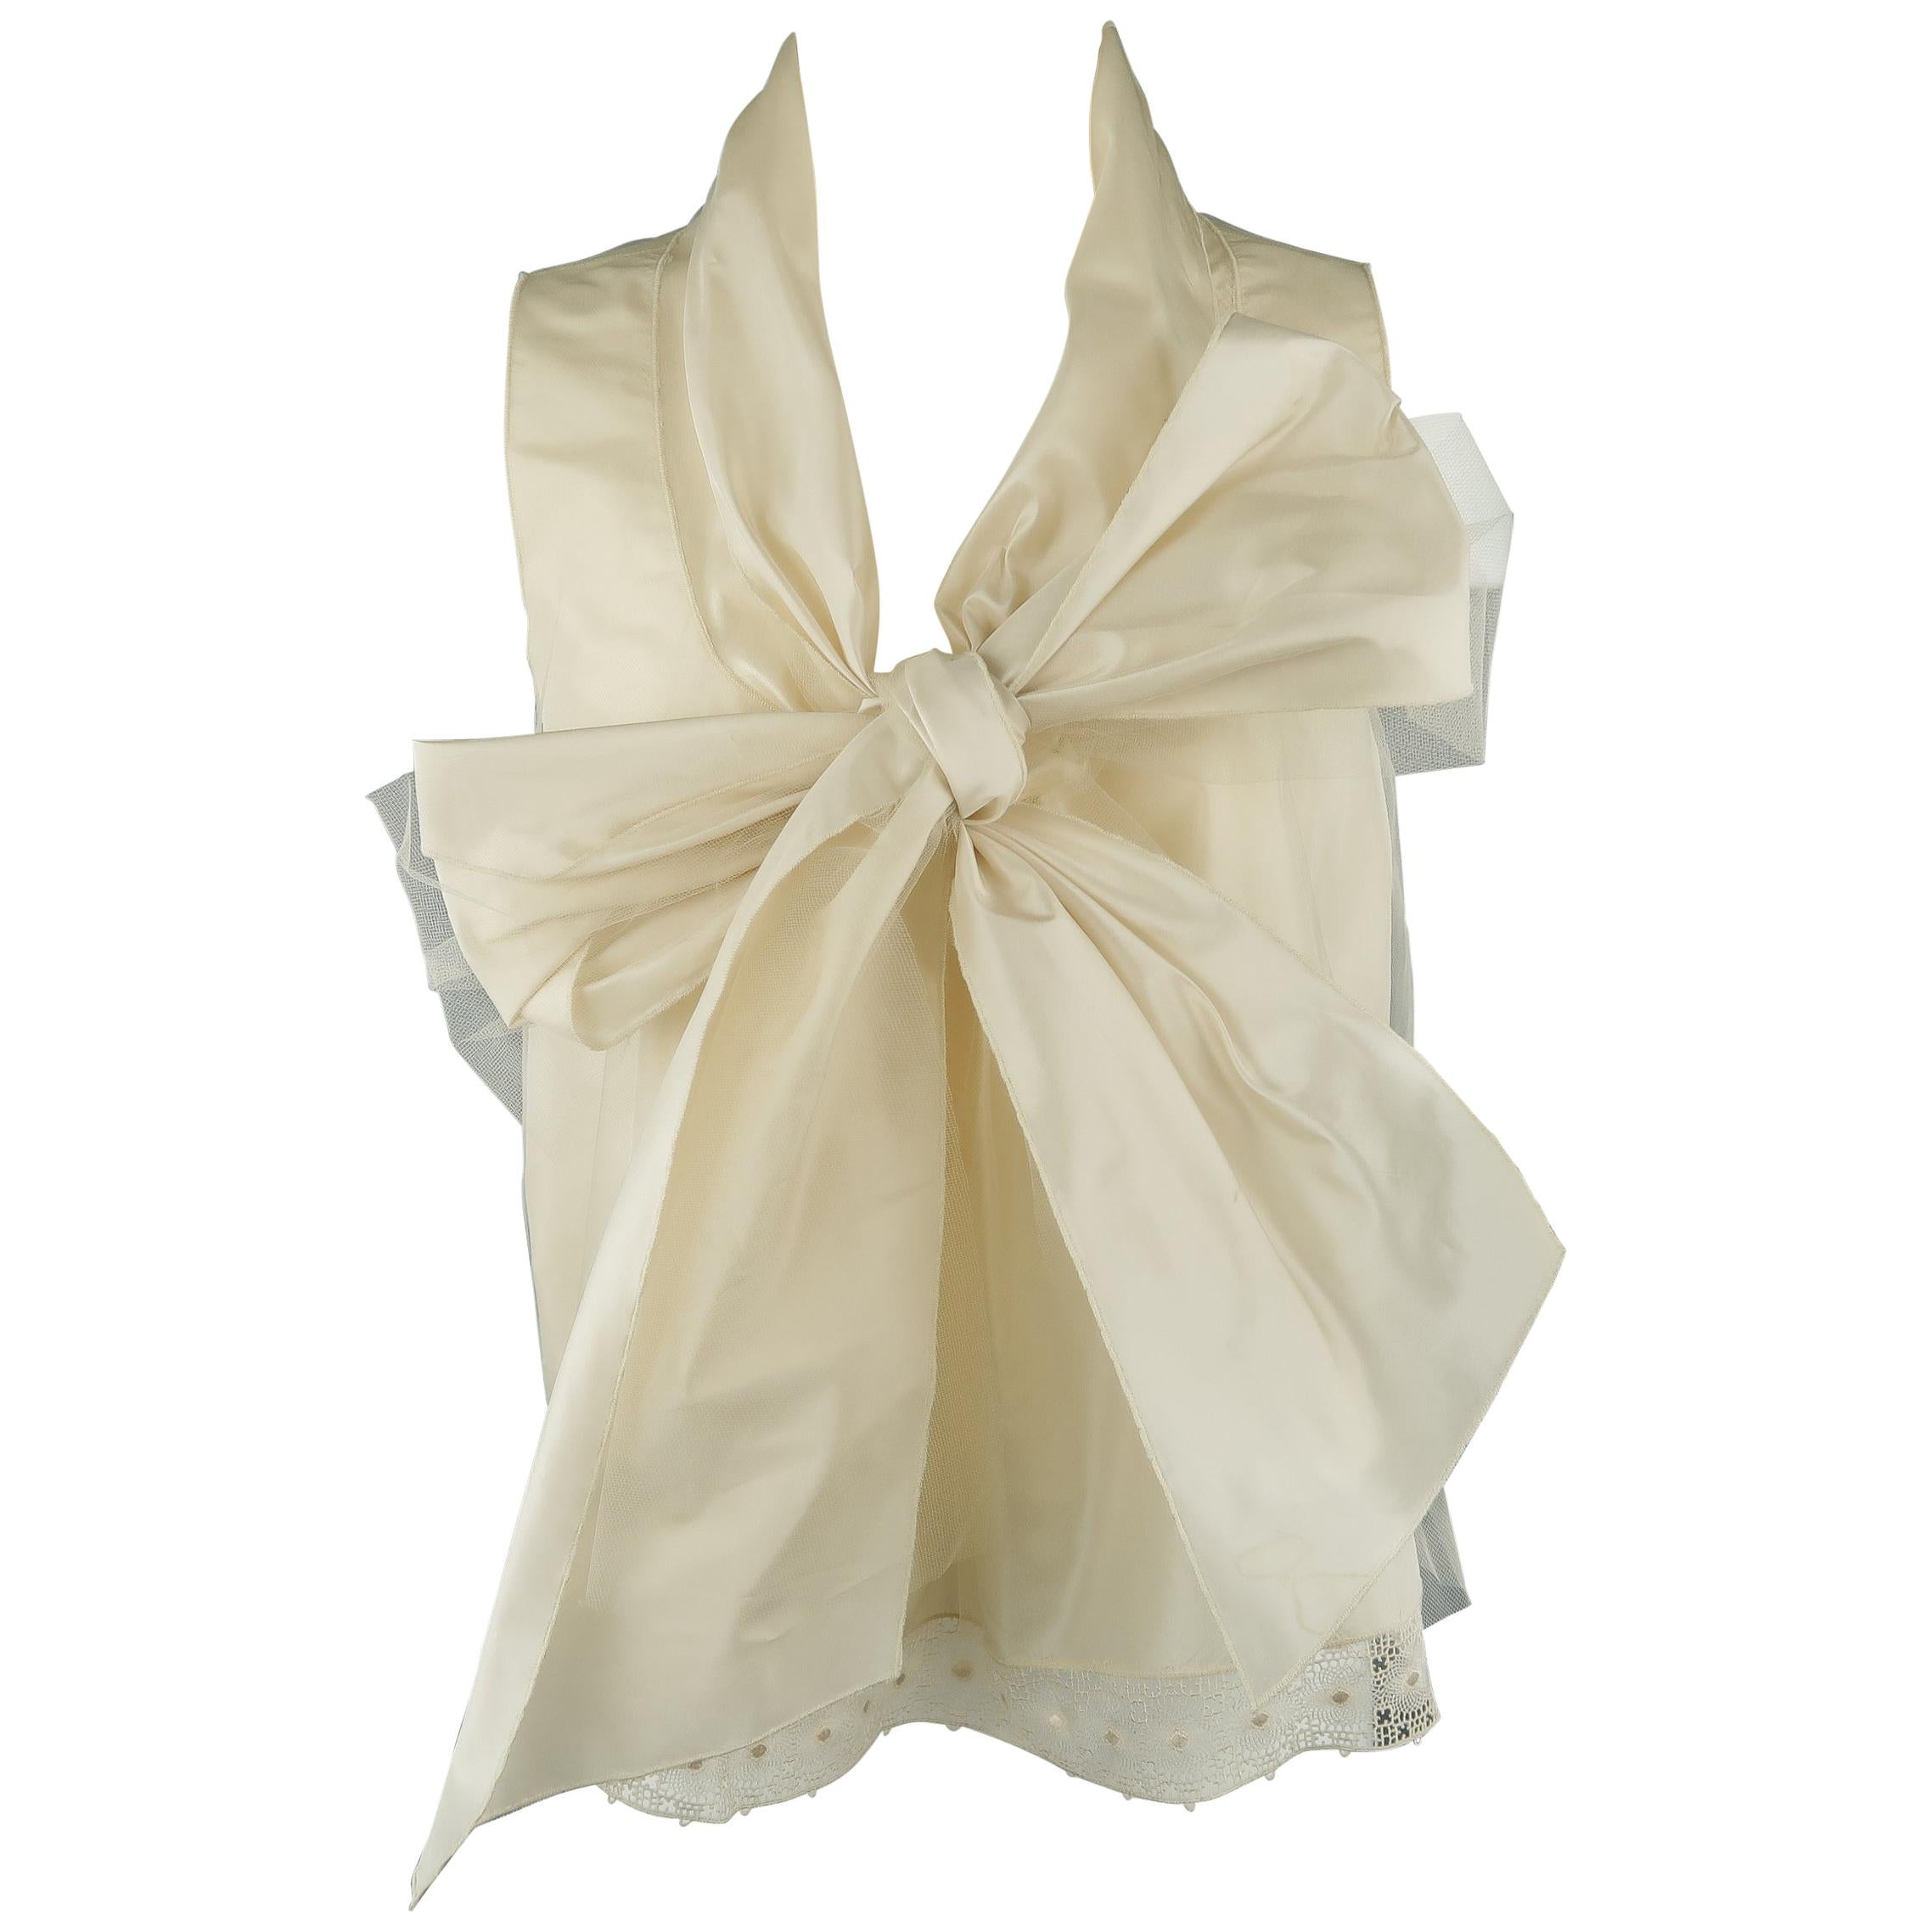 OSCAR DE LA RENTA Size 8 Beige Silk Blend Tulle Overlay Oversized Bow Blouse